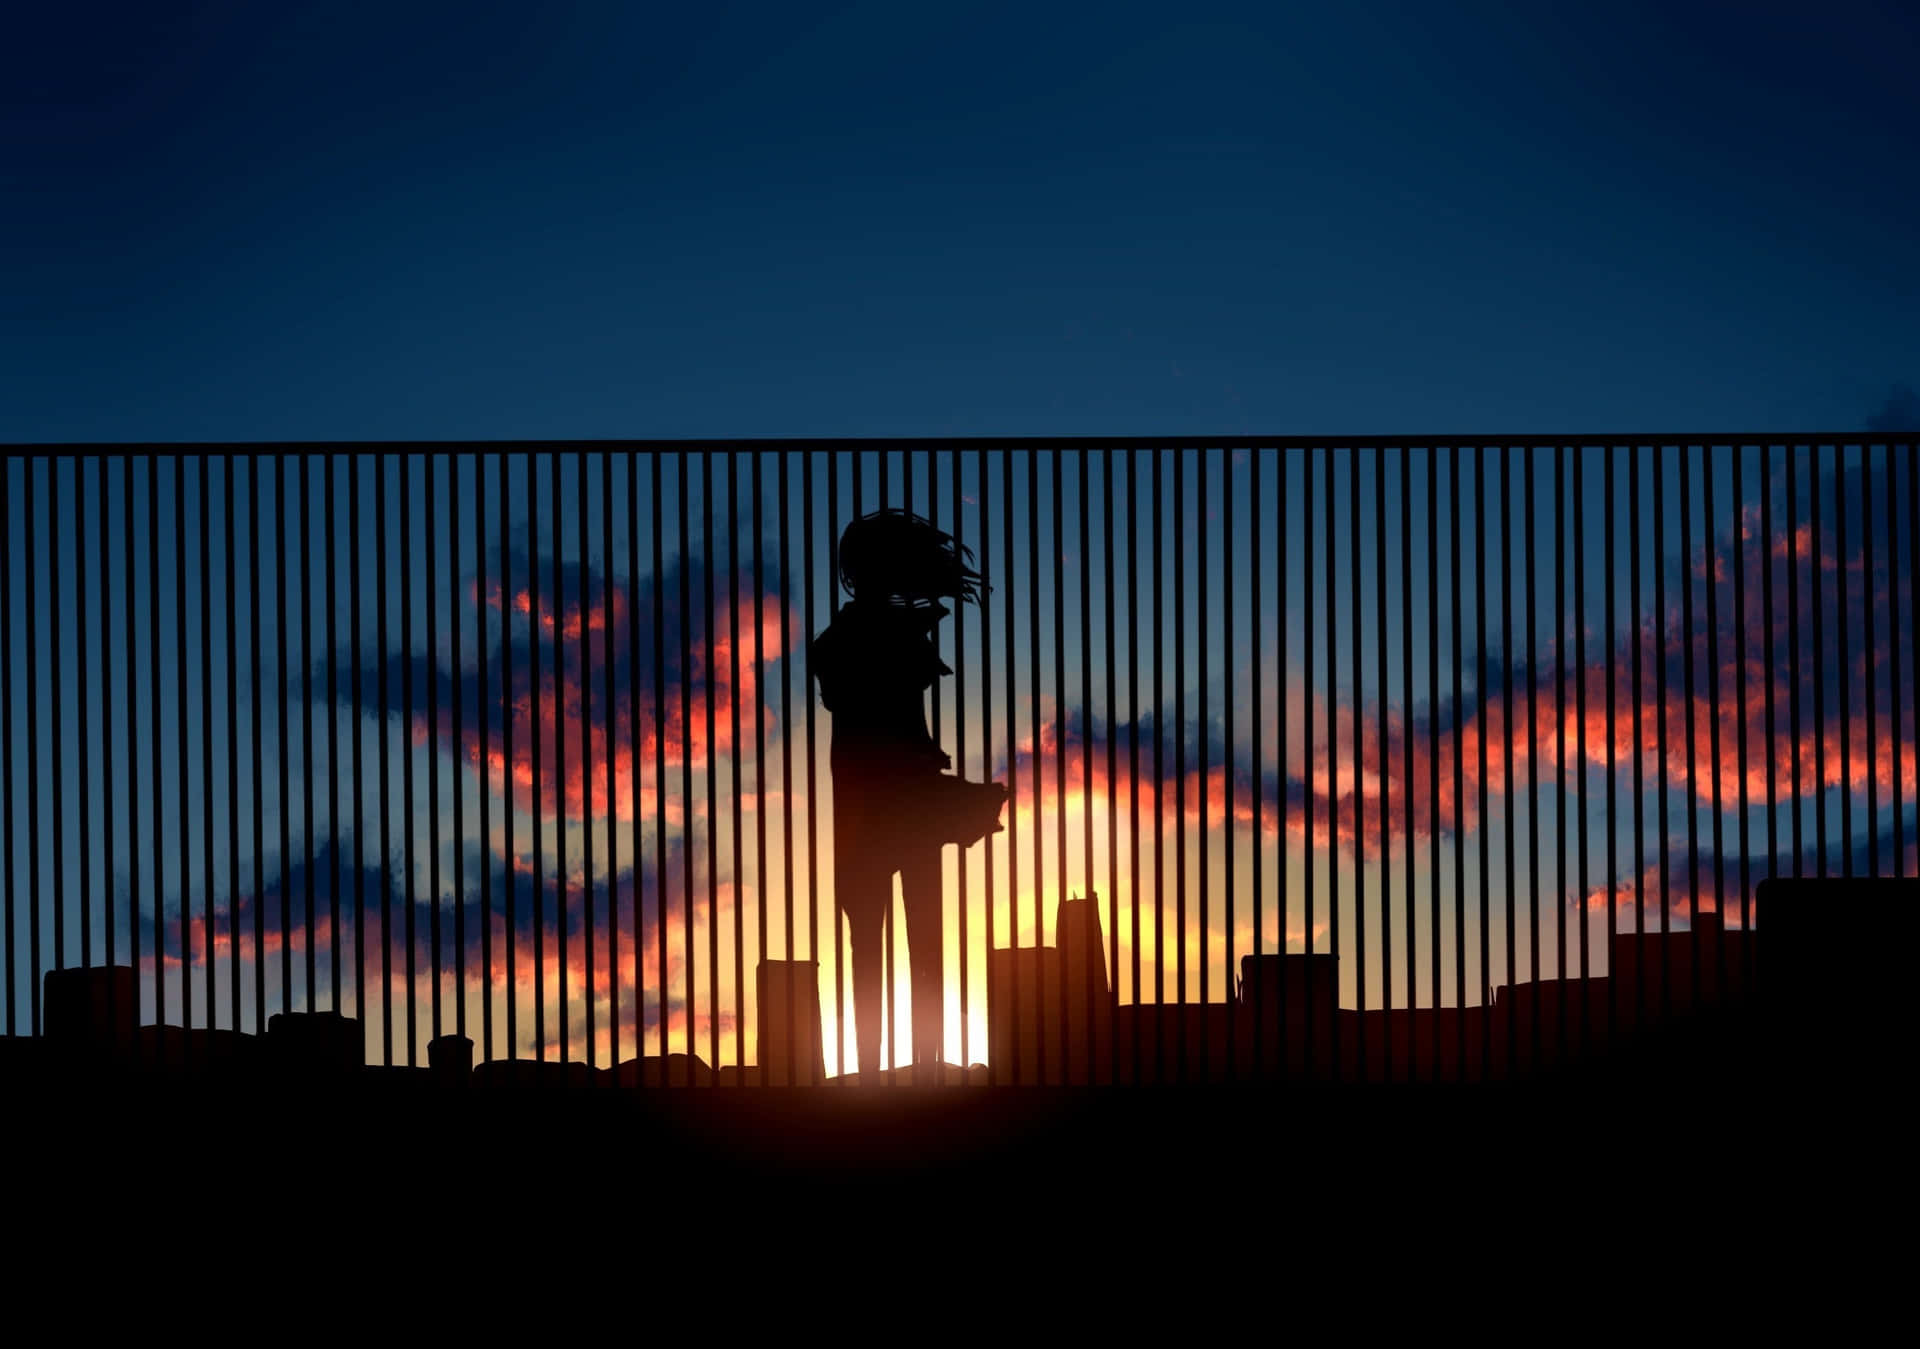 Feel the warm summer sunset, Anime style Wallpaper